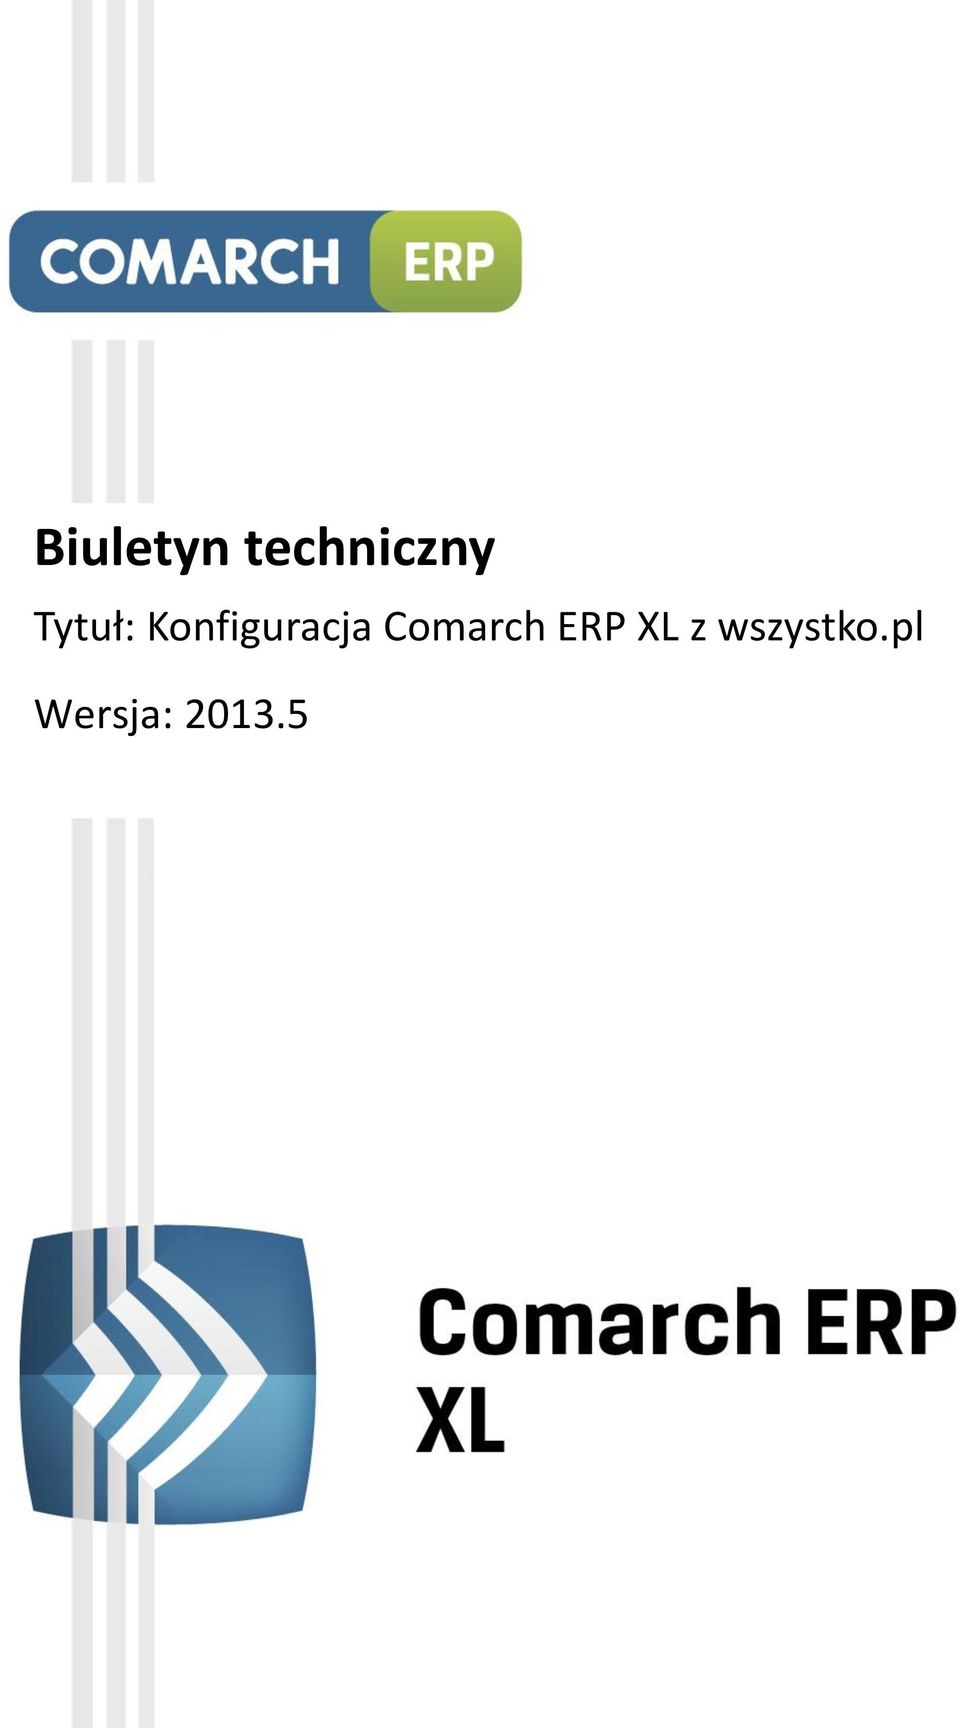 Comarch ERP XL z